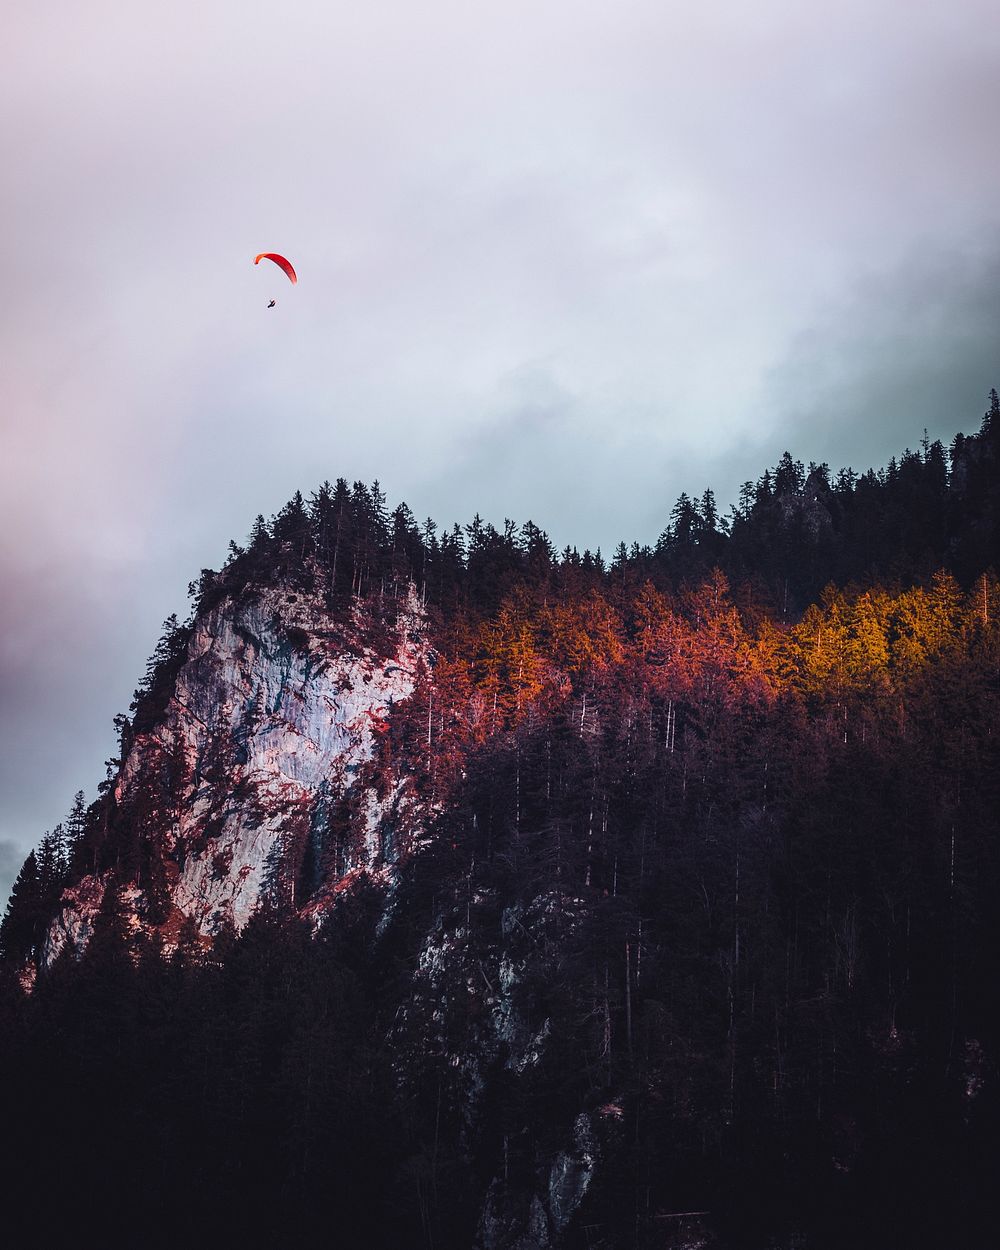 Paraglider in the sky of Schwangau, Germany